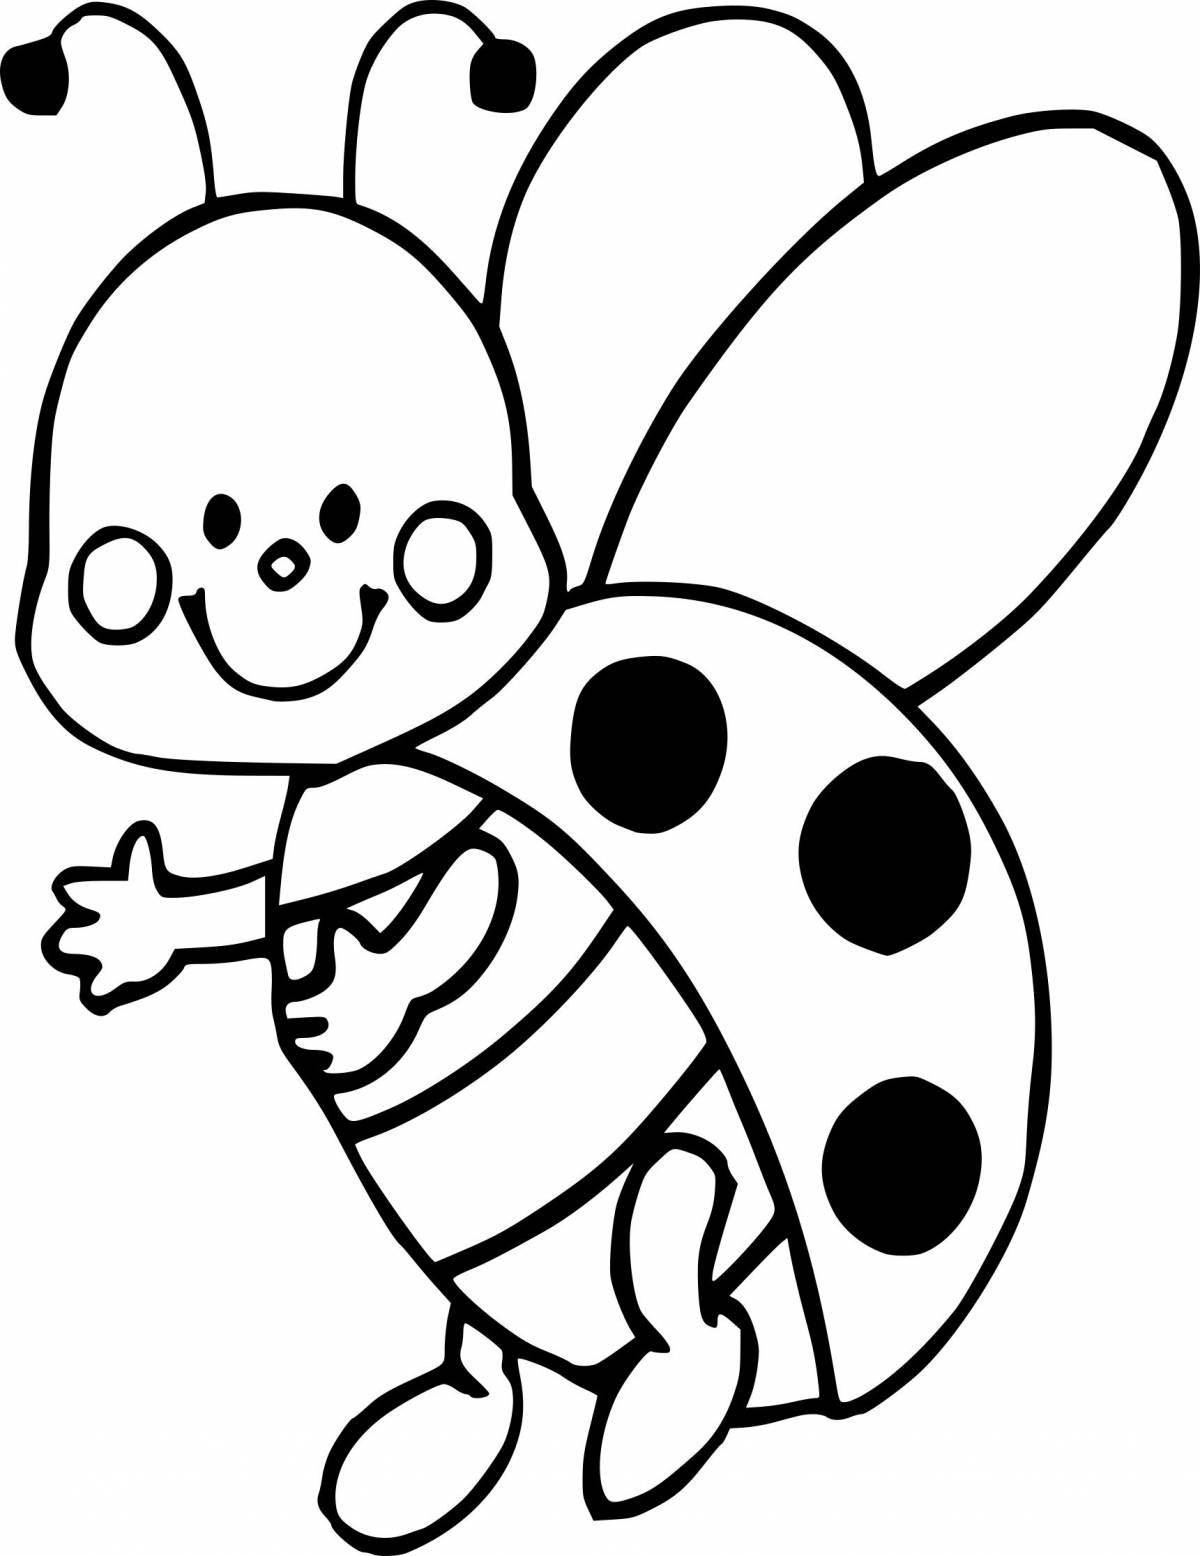 Fancy ladybug coloring book for kids